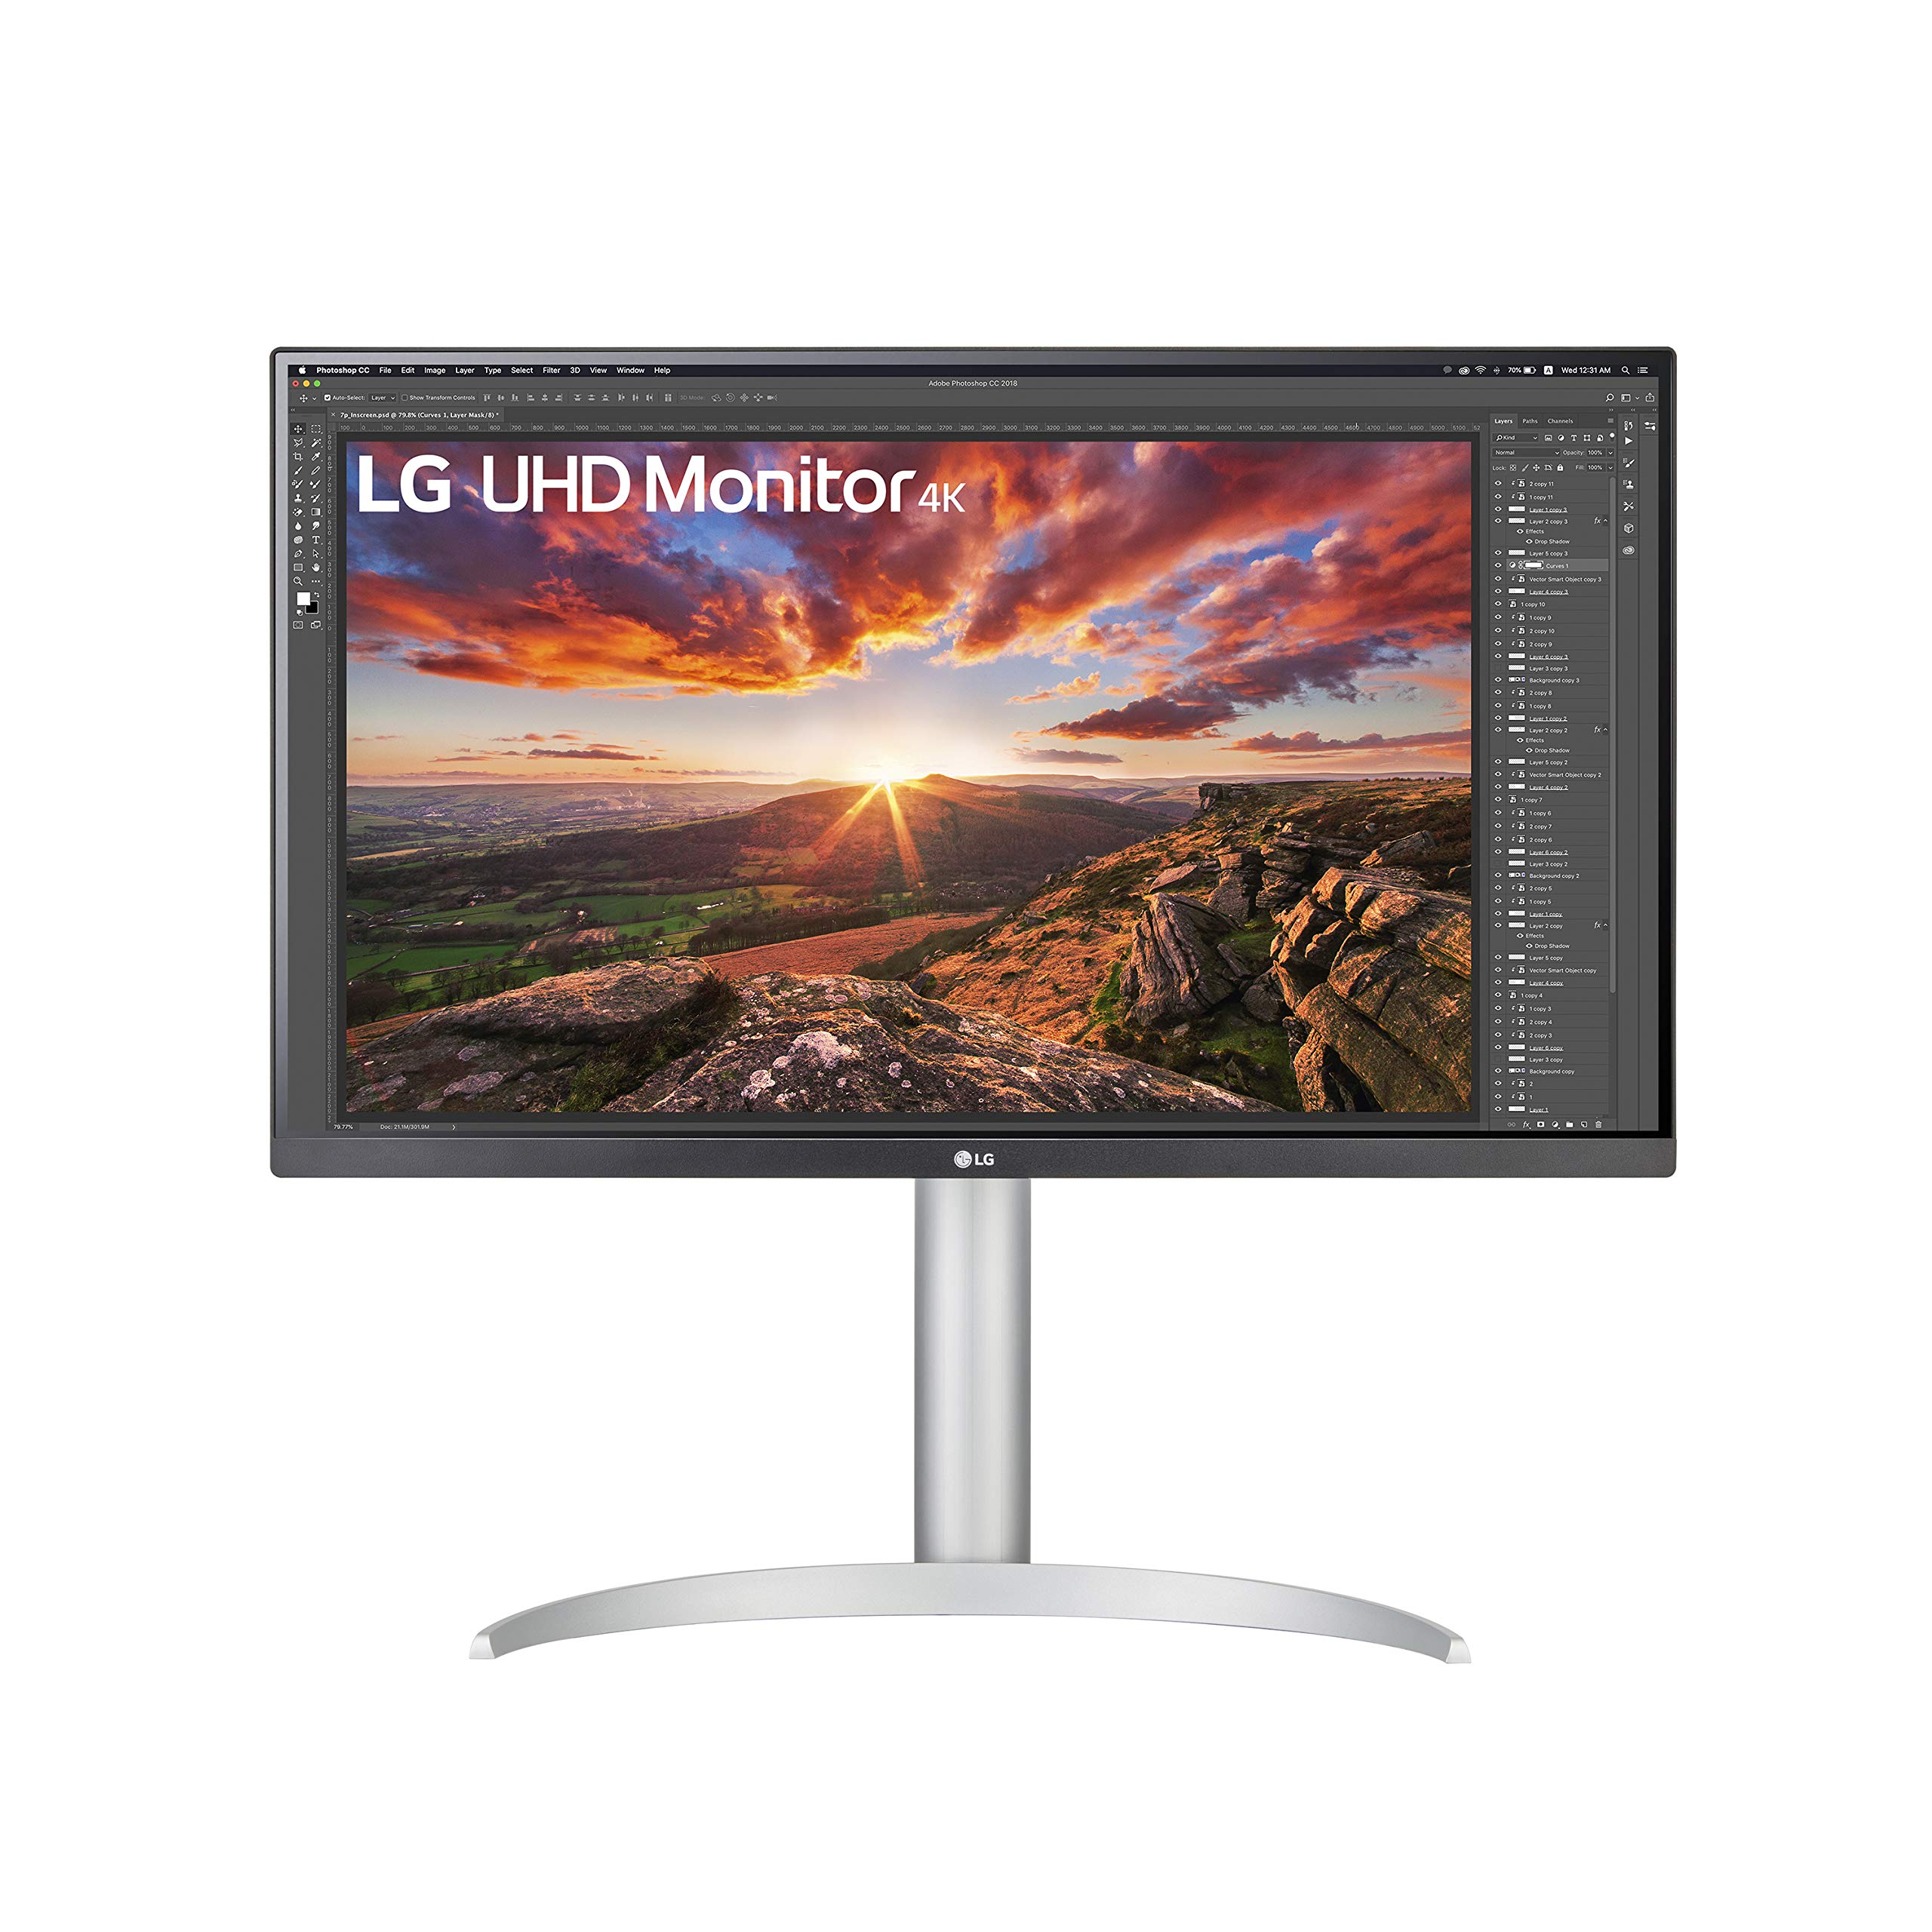 LG 27UP850-W Monitor 27” UHD (3840 x 2160) IPS Display, VESA DisplayHDR 400, DCI-P3 95% Color Gamut, USB-C,3-Side Virtually Borderless Display, Height/Pivot/Tilt Adjustable Stand - Silver